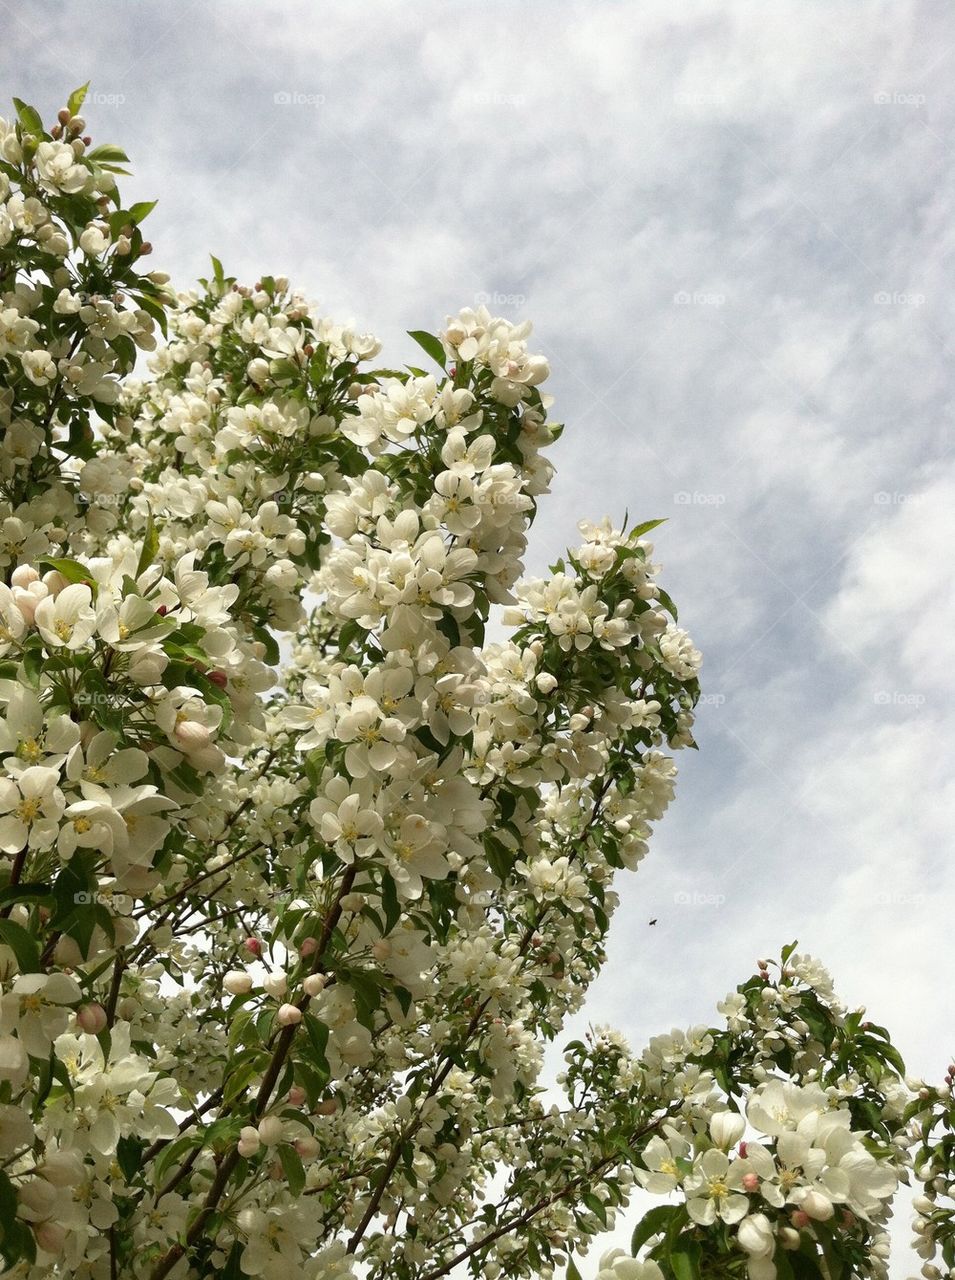 Spring Snow Tree in Bloom